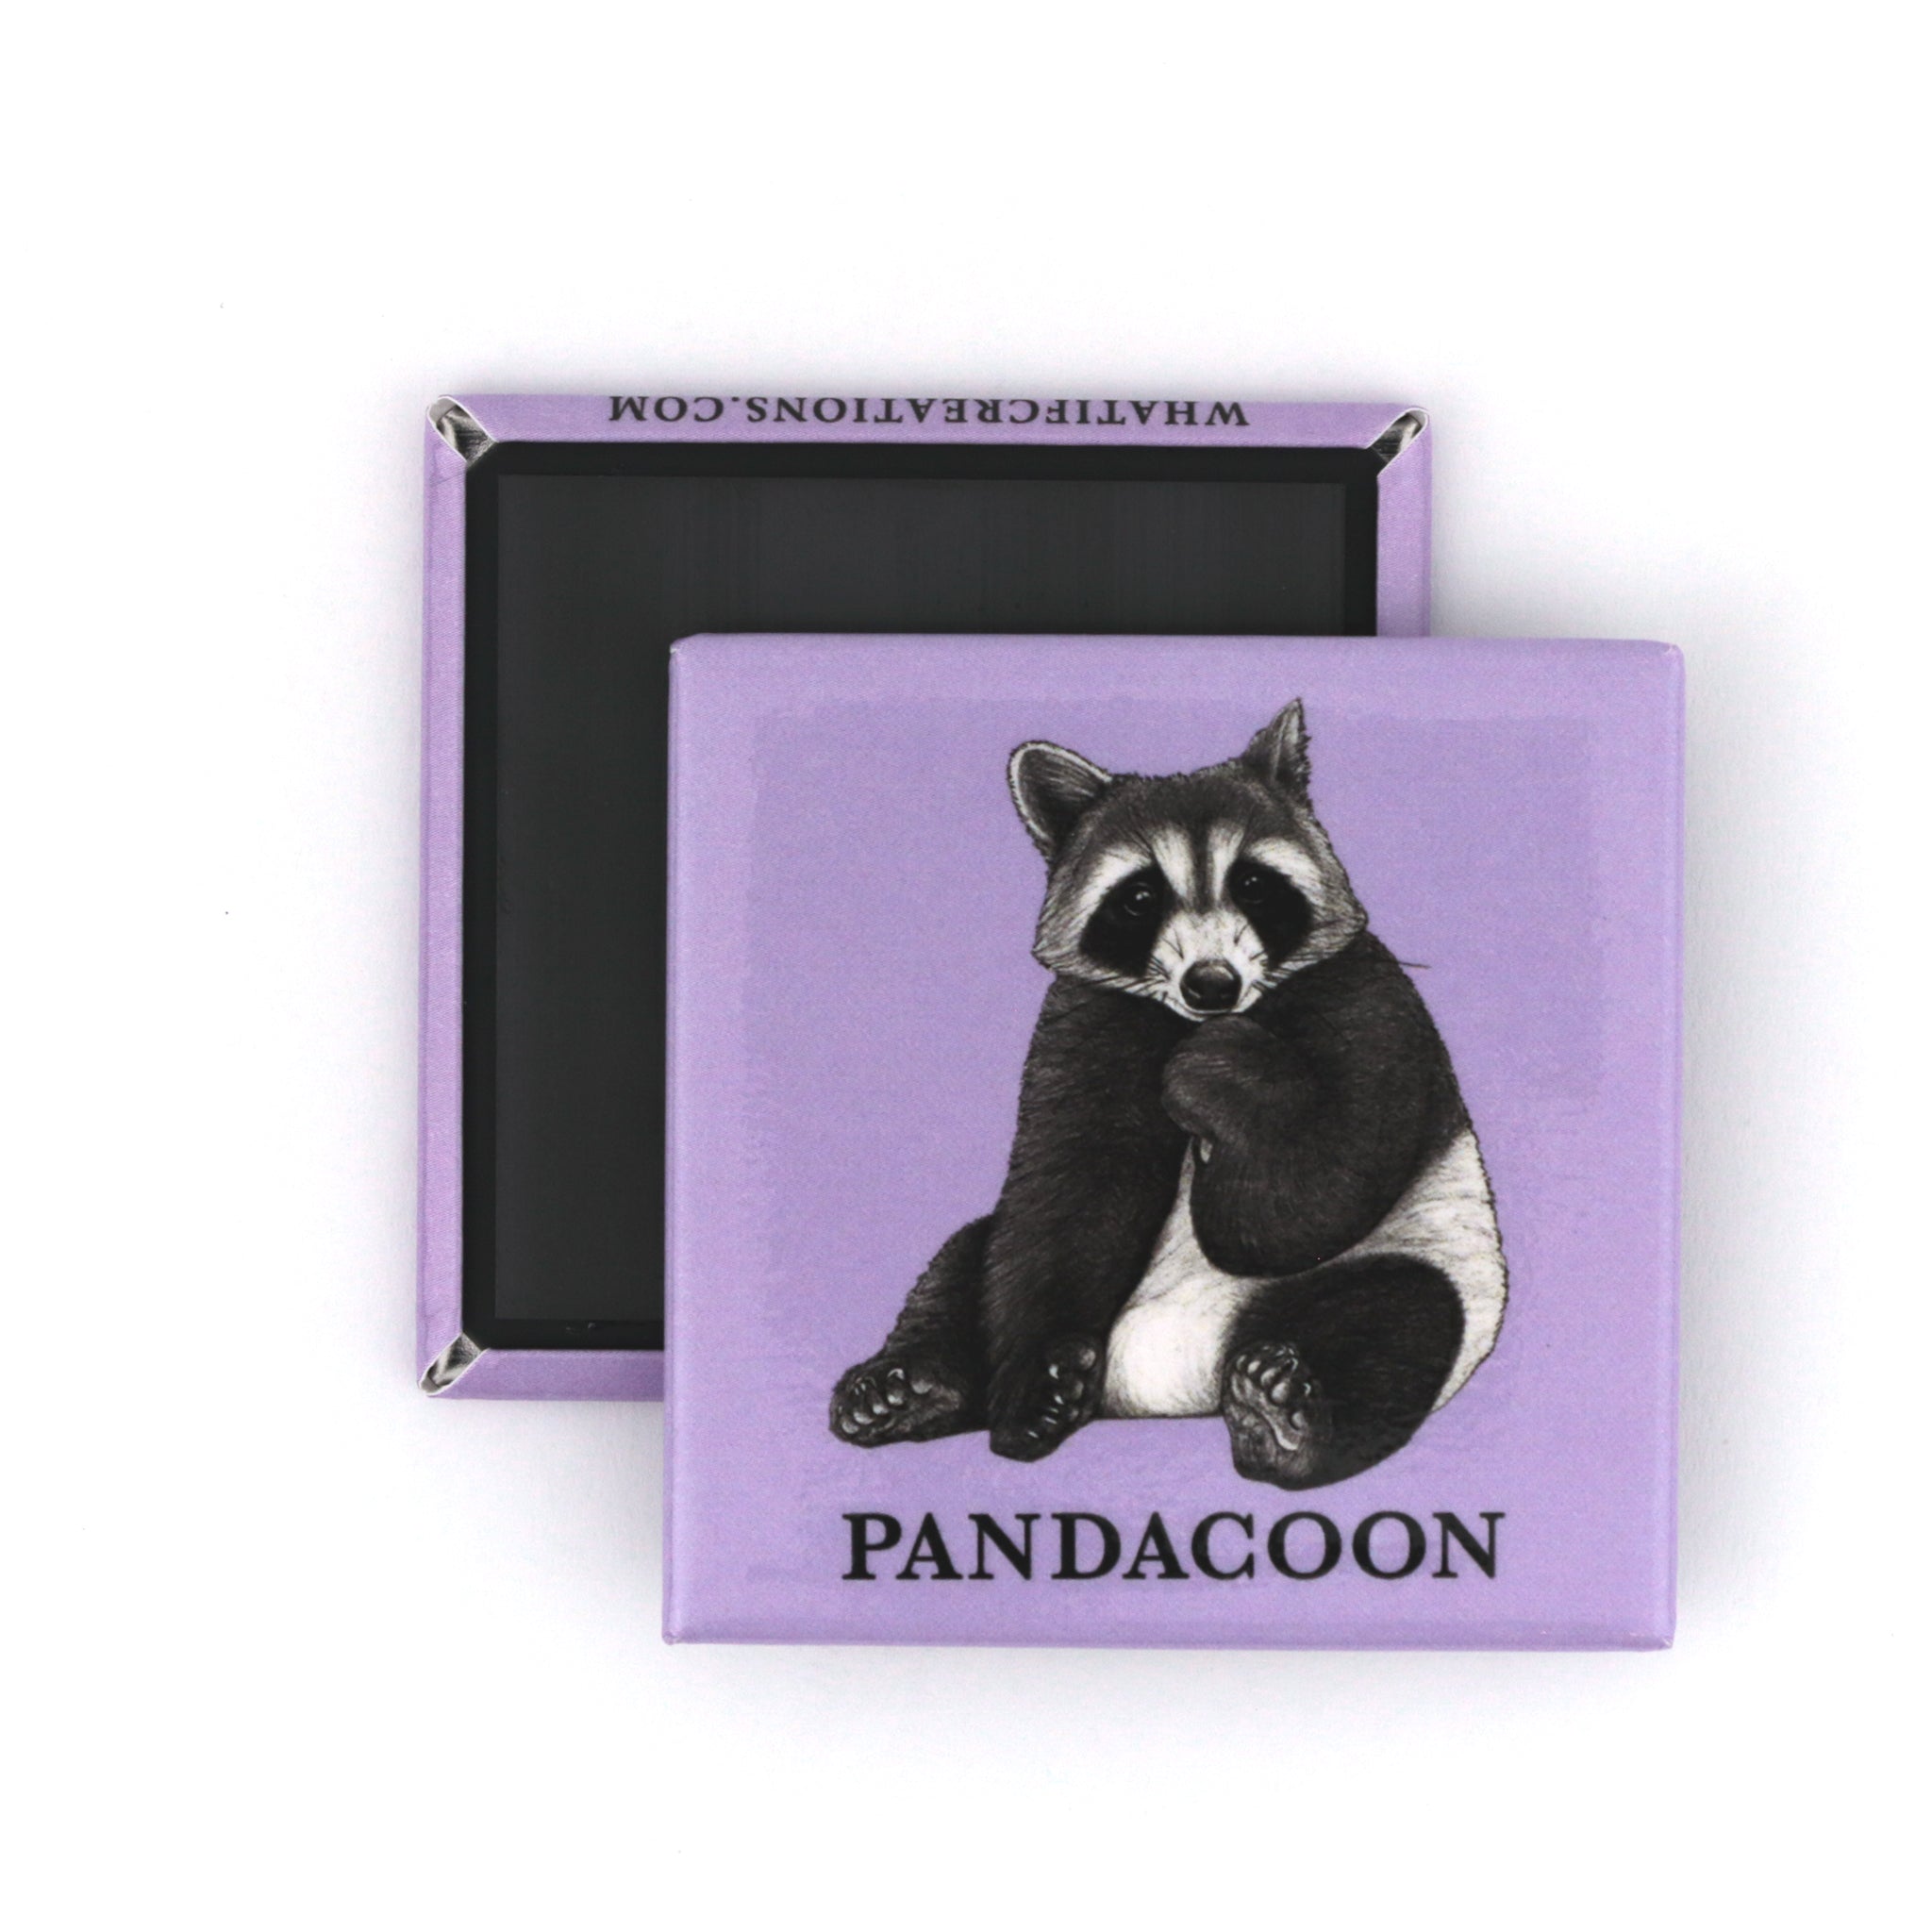 Pandacoon | Panda + Raccoon Hybrid Animal | 2" Fridge Magnet